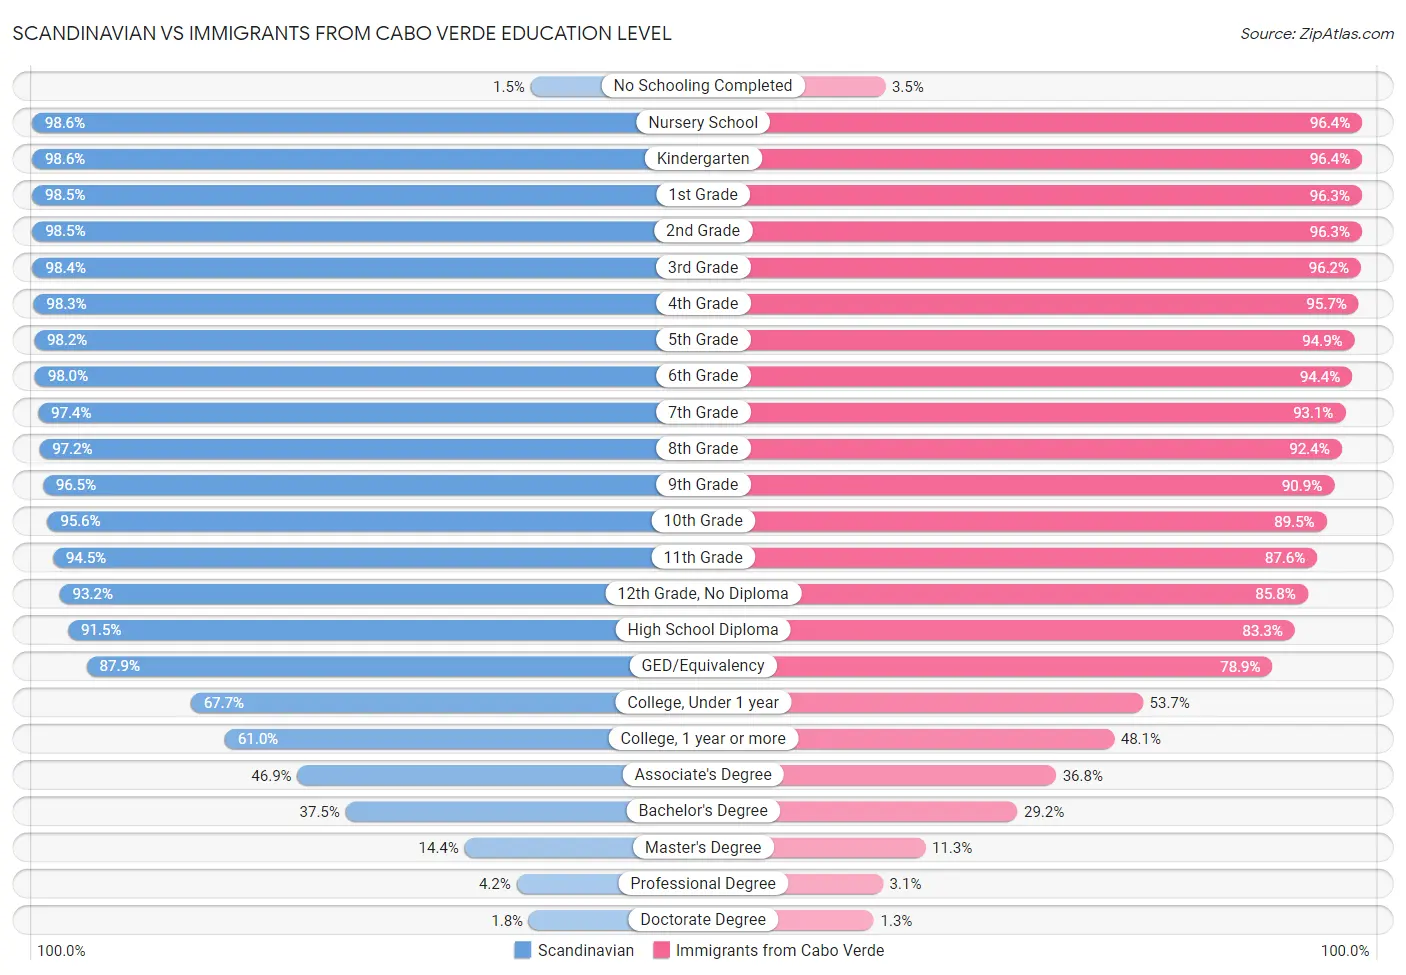 Scandinavian vs Immigrants from Cabo Verde Education Level